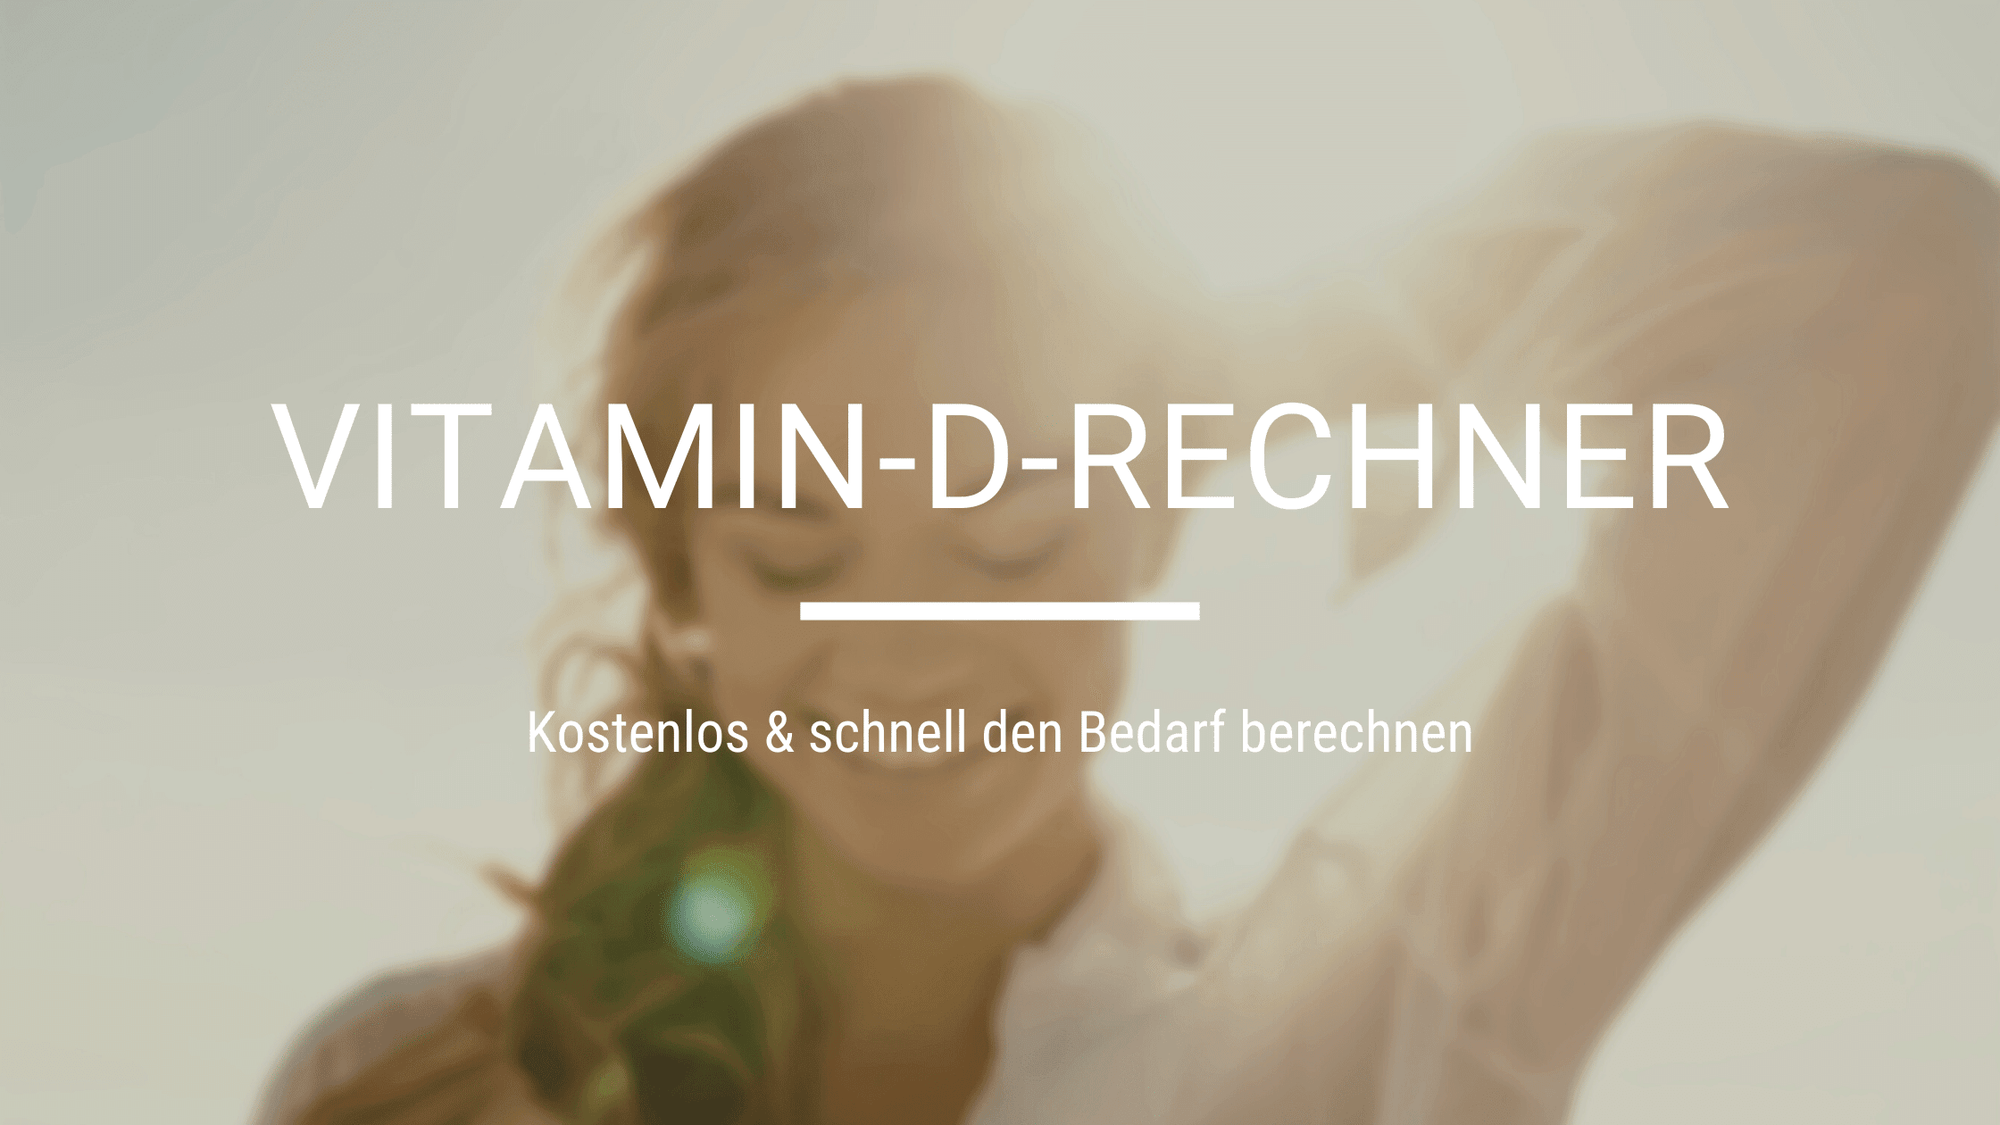 Vitamin-D-Rechner - edubily GmbH